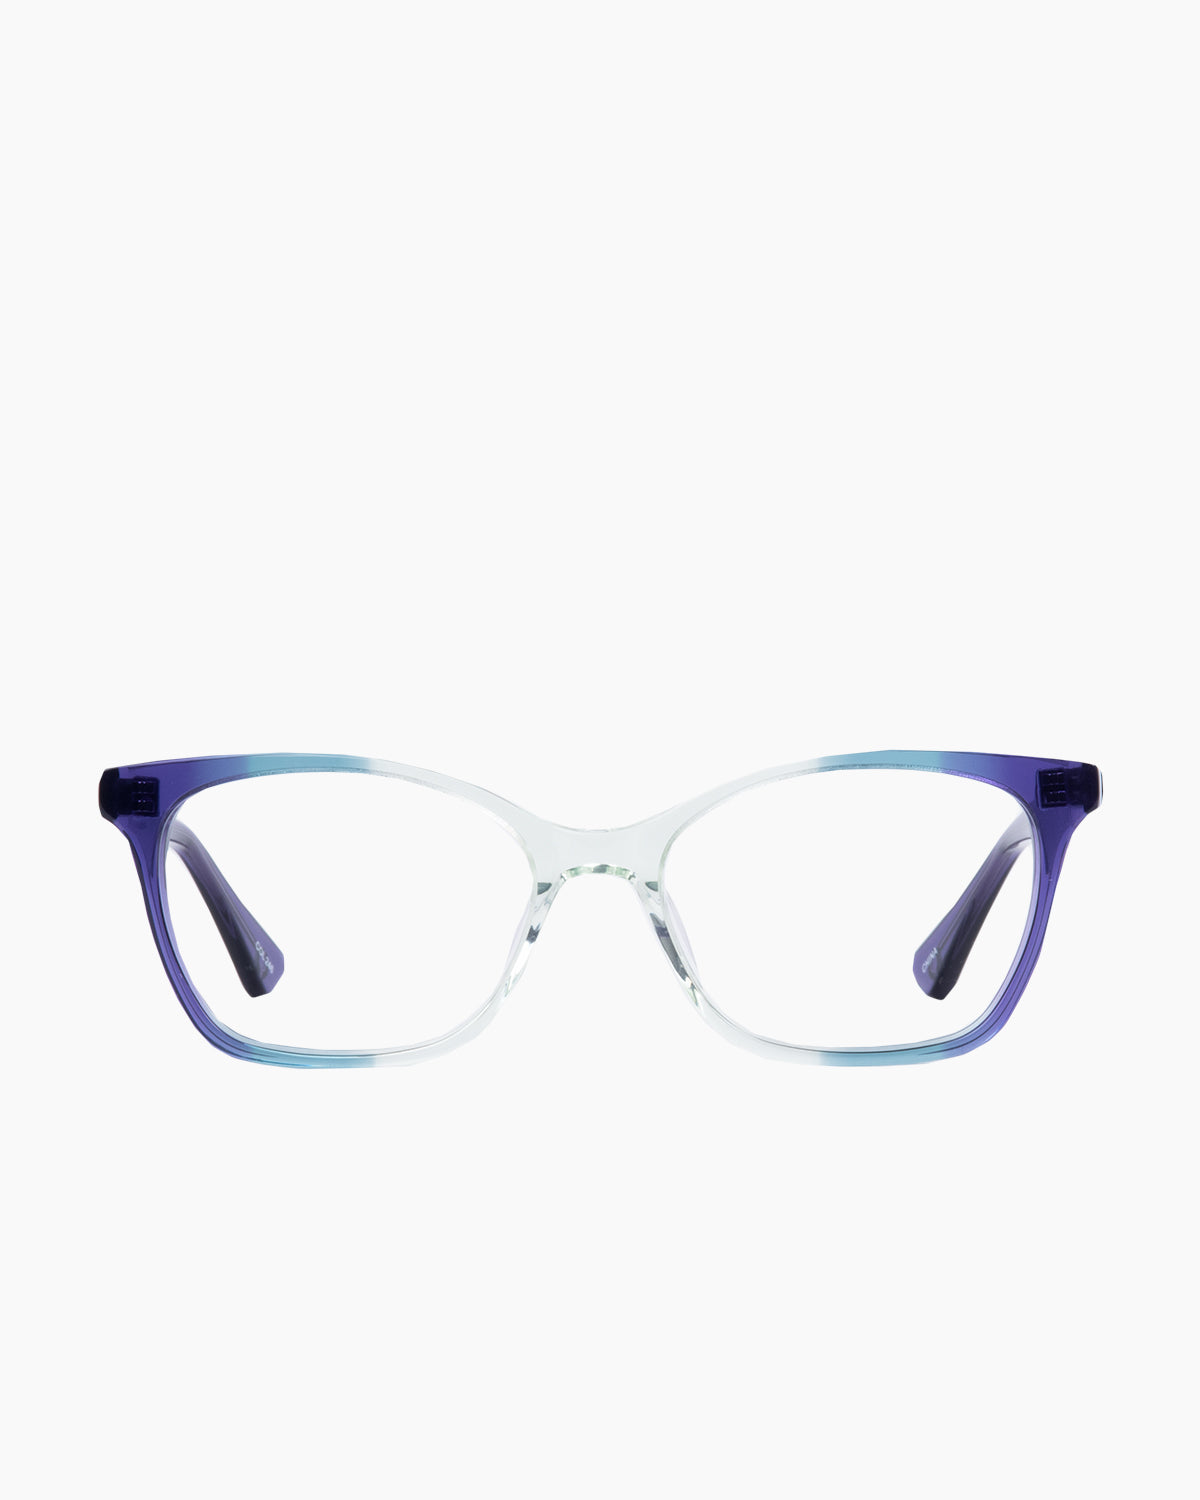 Evolve - Sophia - 246 | glasses bar:  Marie-Sophie Dion